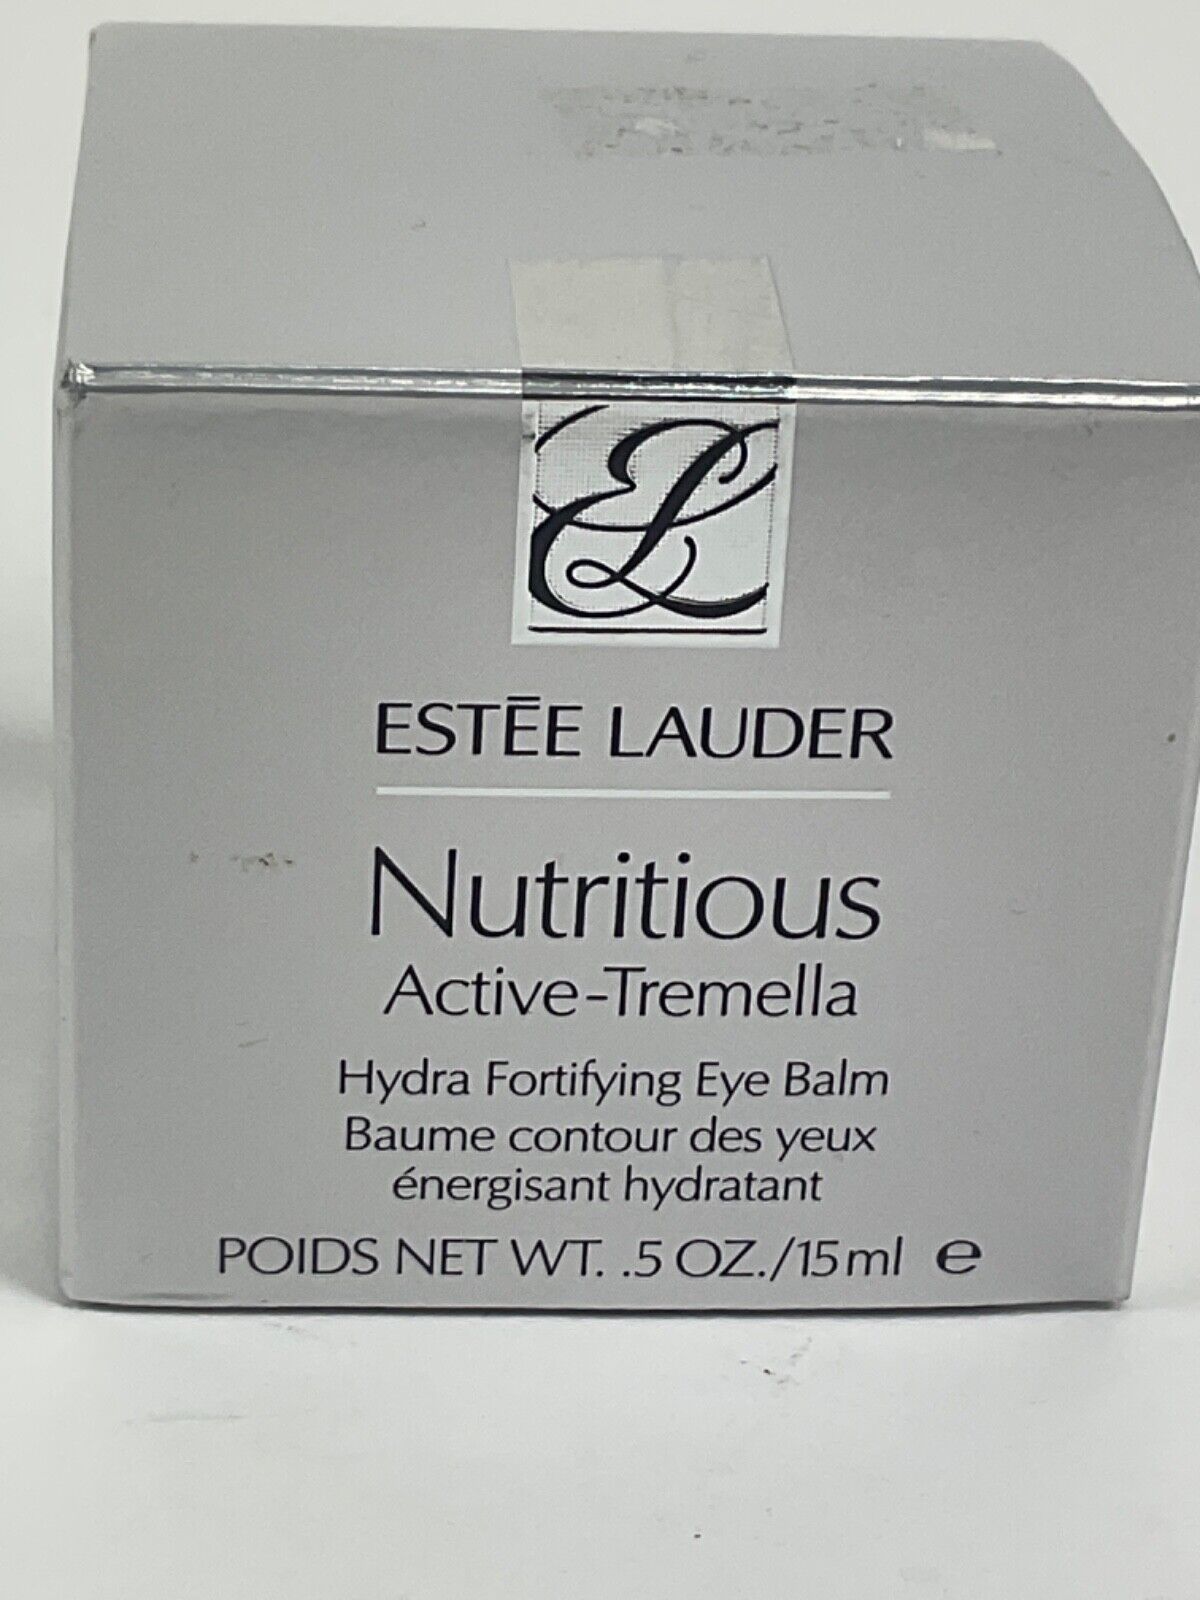 Estee Lauder Nutritious Active-Tremella Hydrating Fortifying Eye Balm .05 oz - $24.99